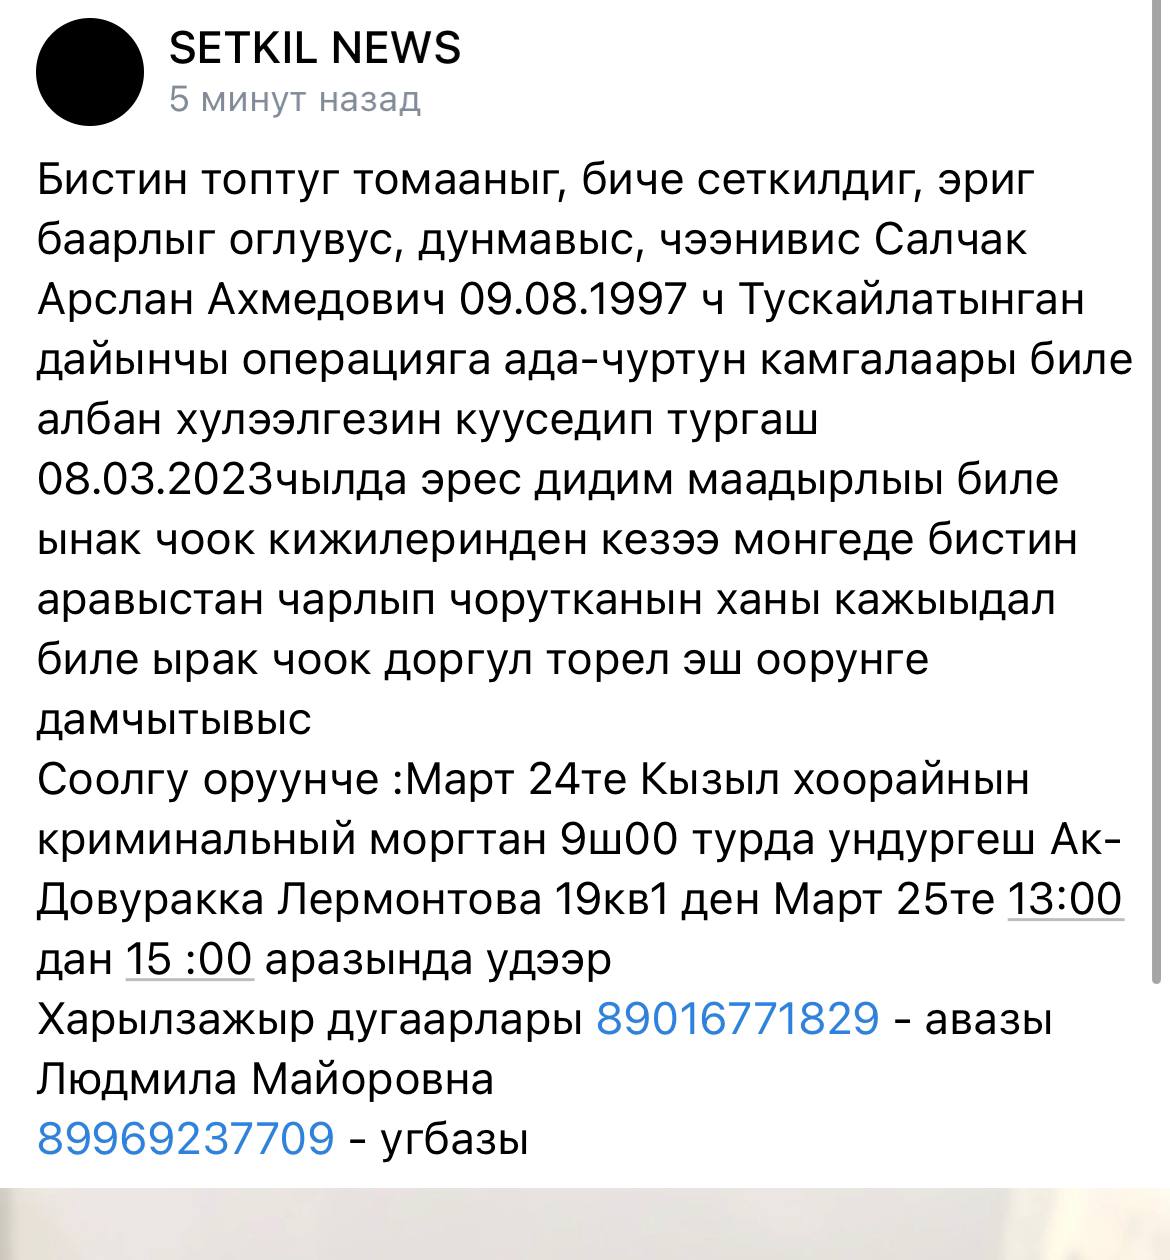 Салчак Арслан Ахмедович погиб 08.03.2023 из региона Тыва, город Кызыл